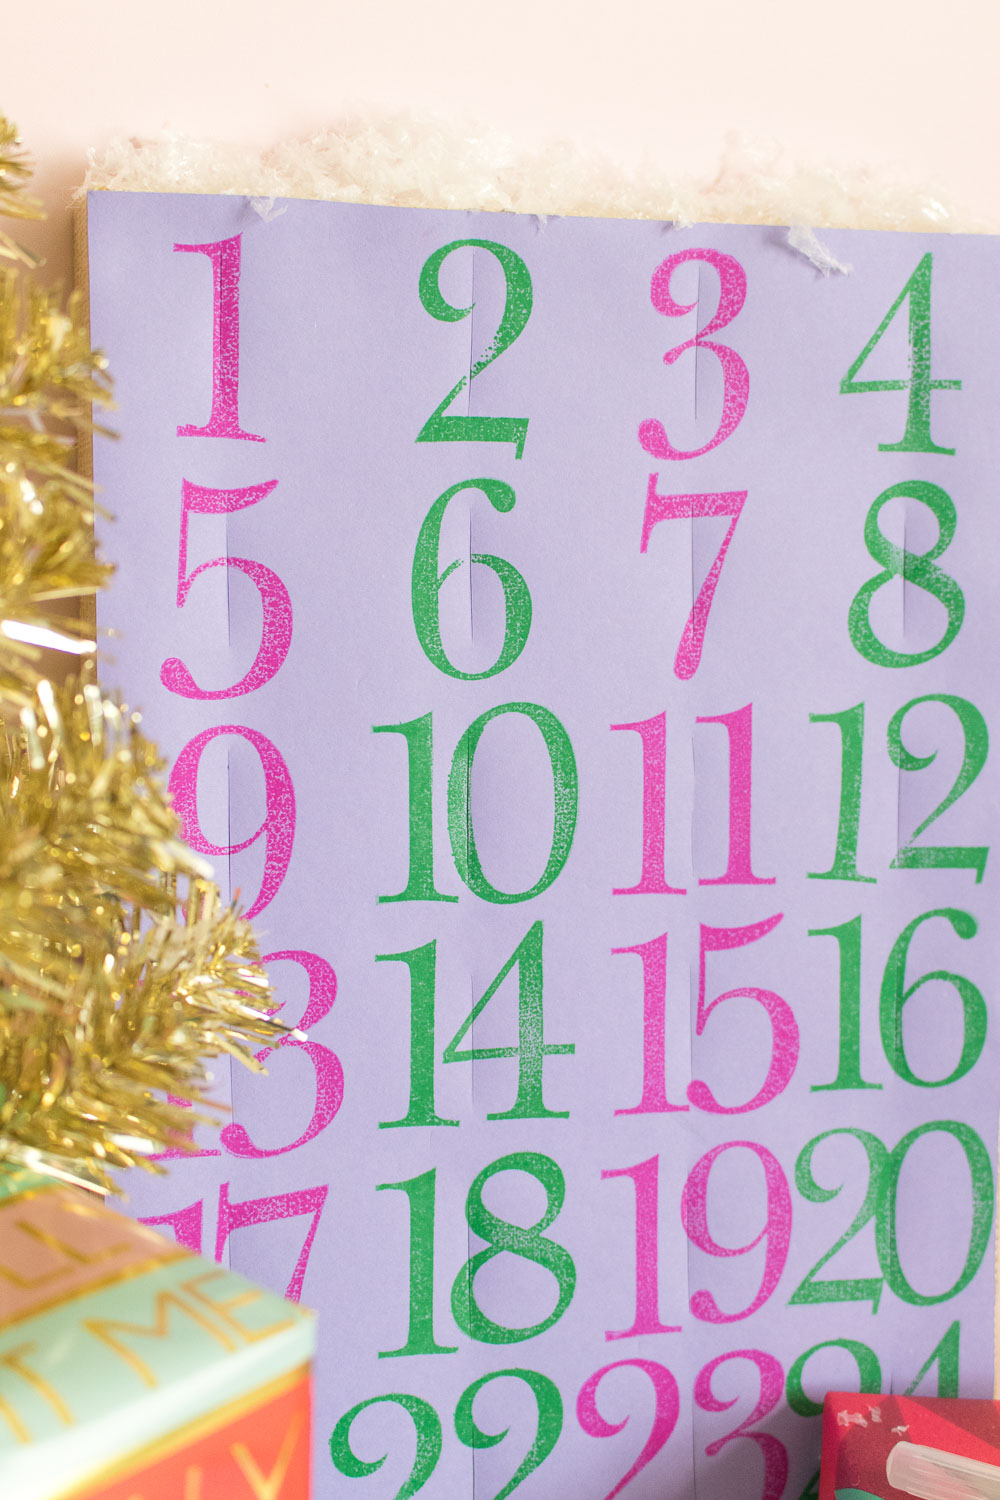 DIY Custom Advent Calendar for Christmas | Club Crafted